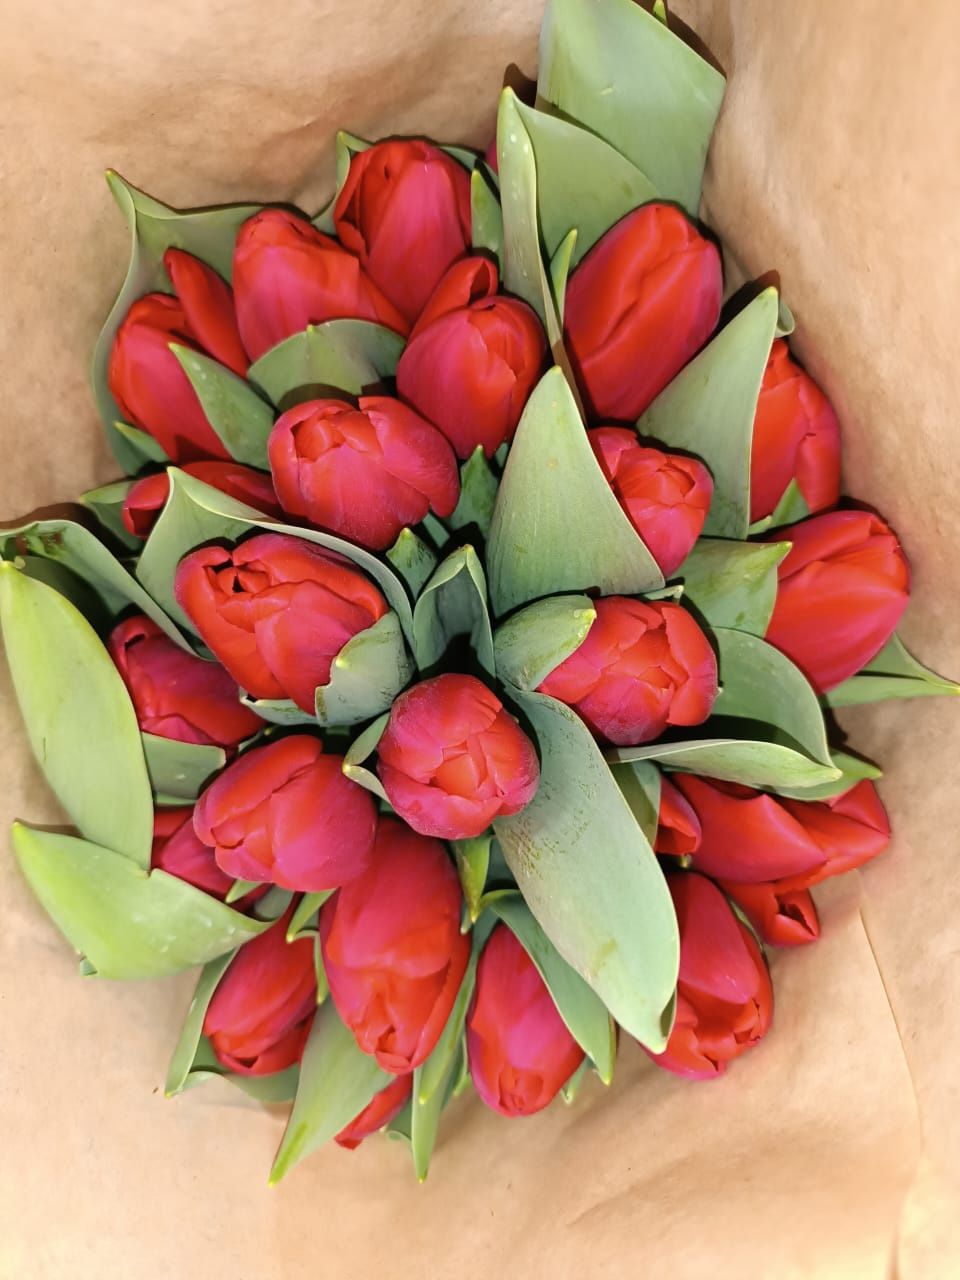 Голландский тюльпаны